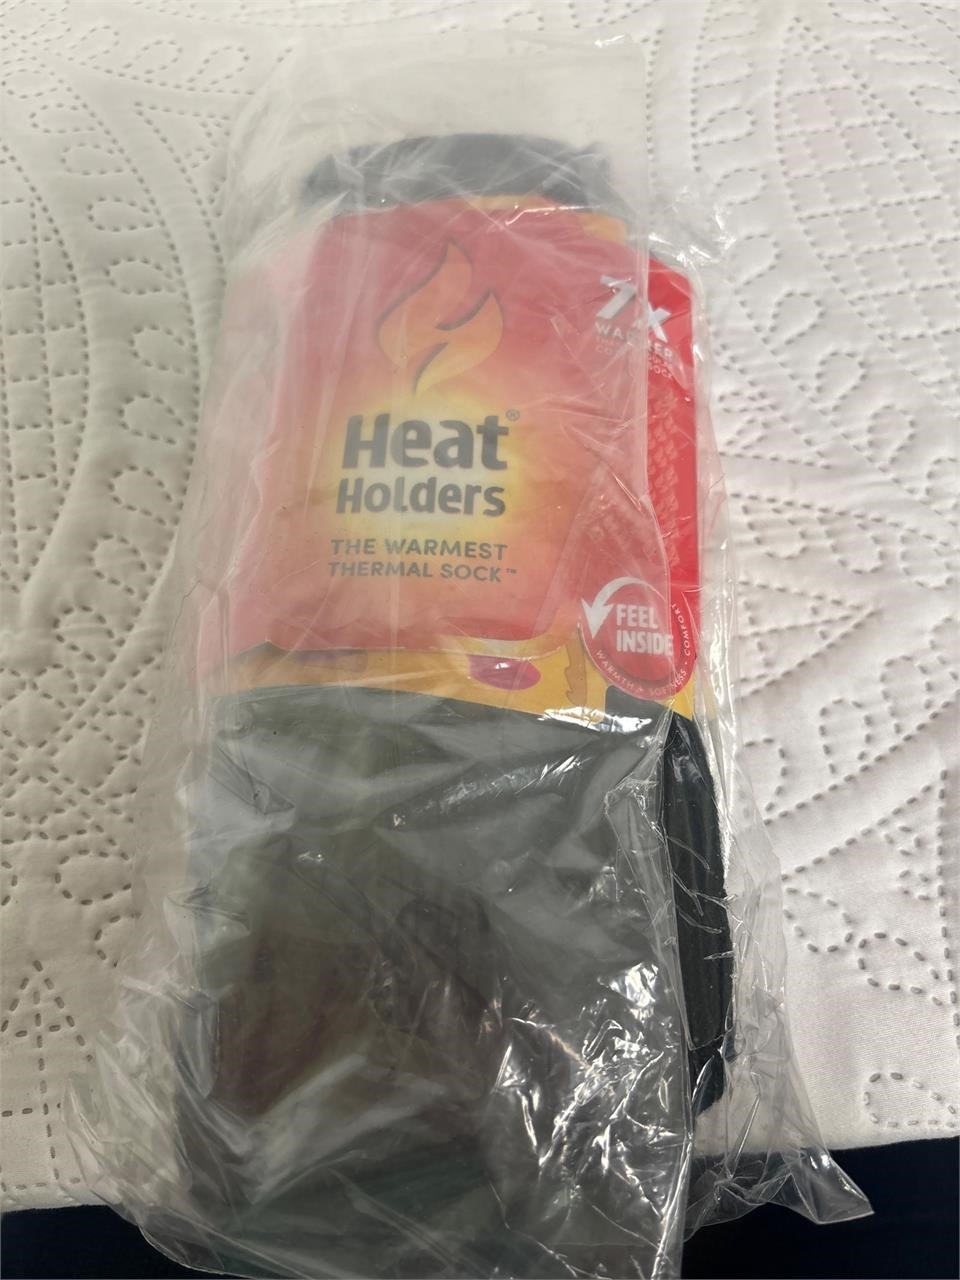 Heat holder socks